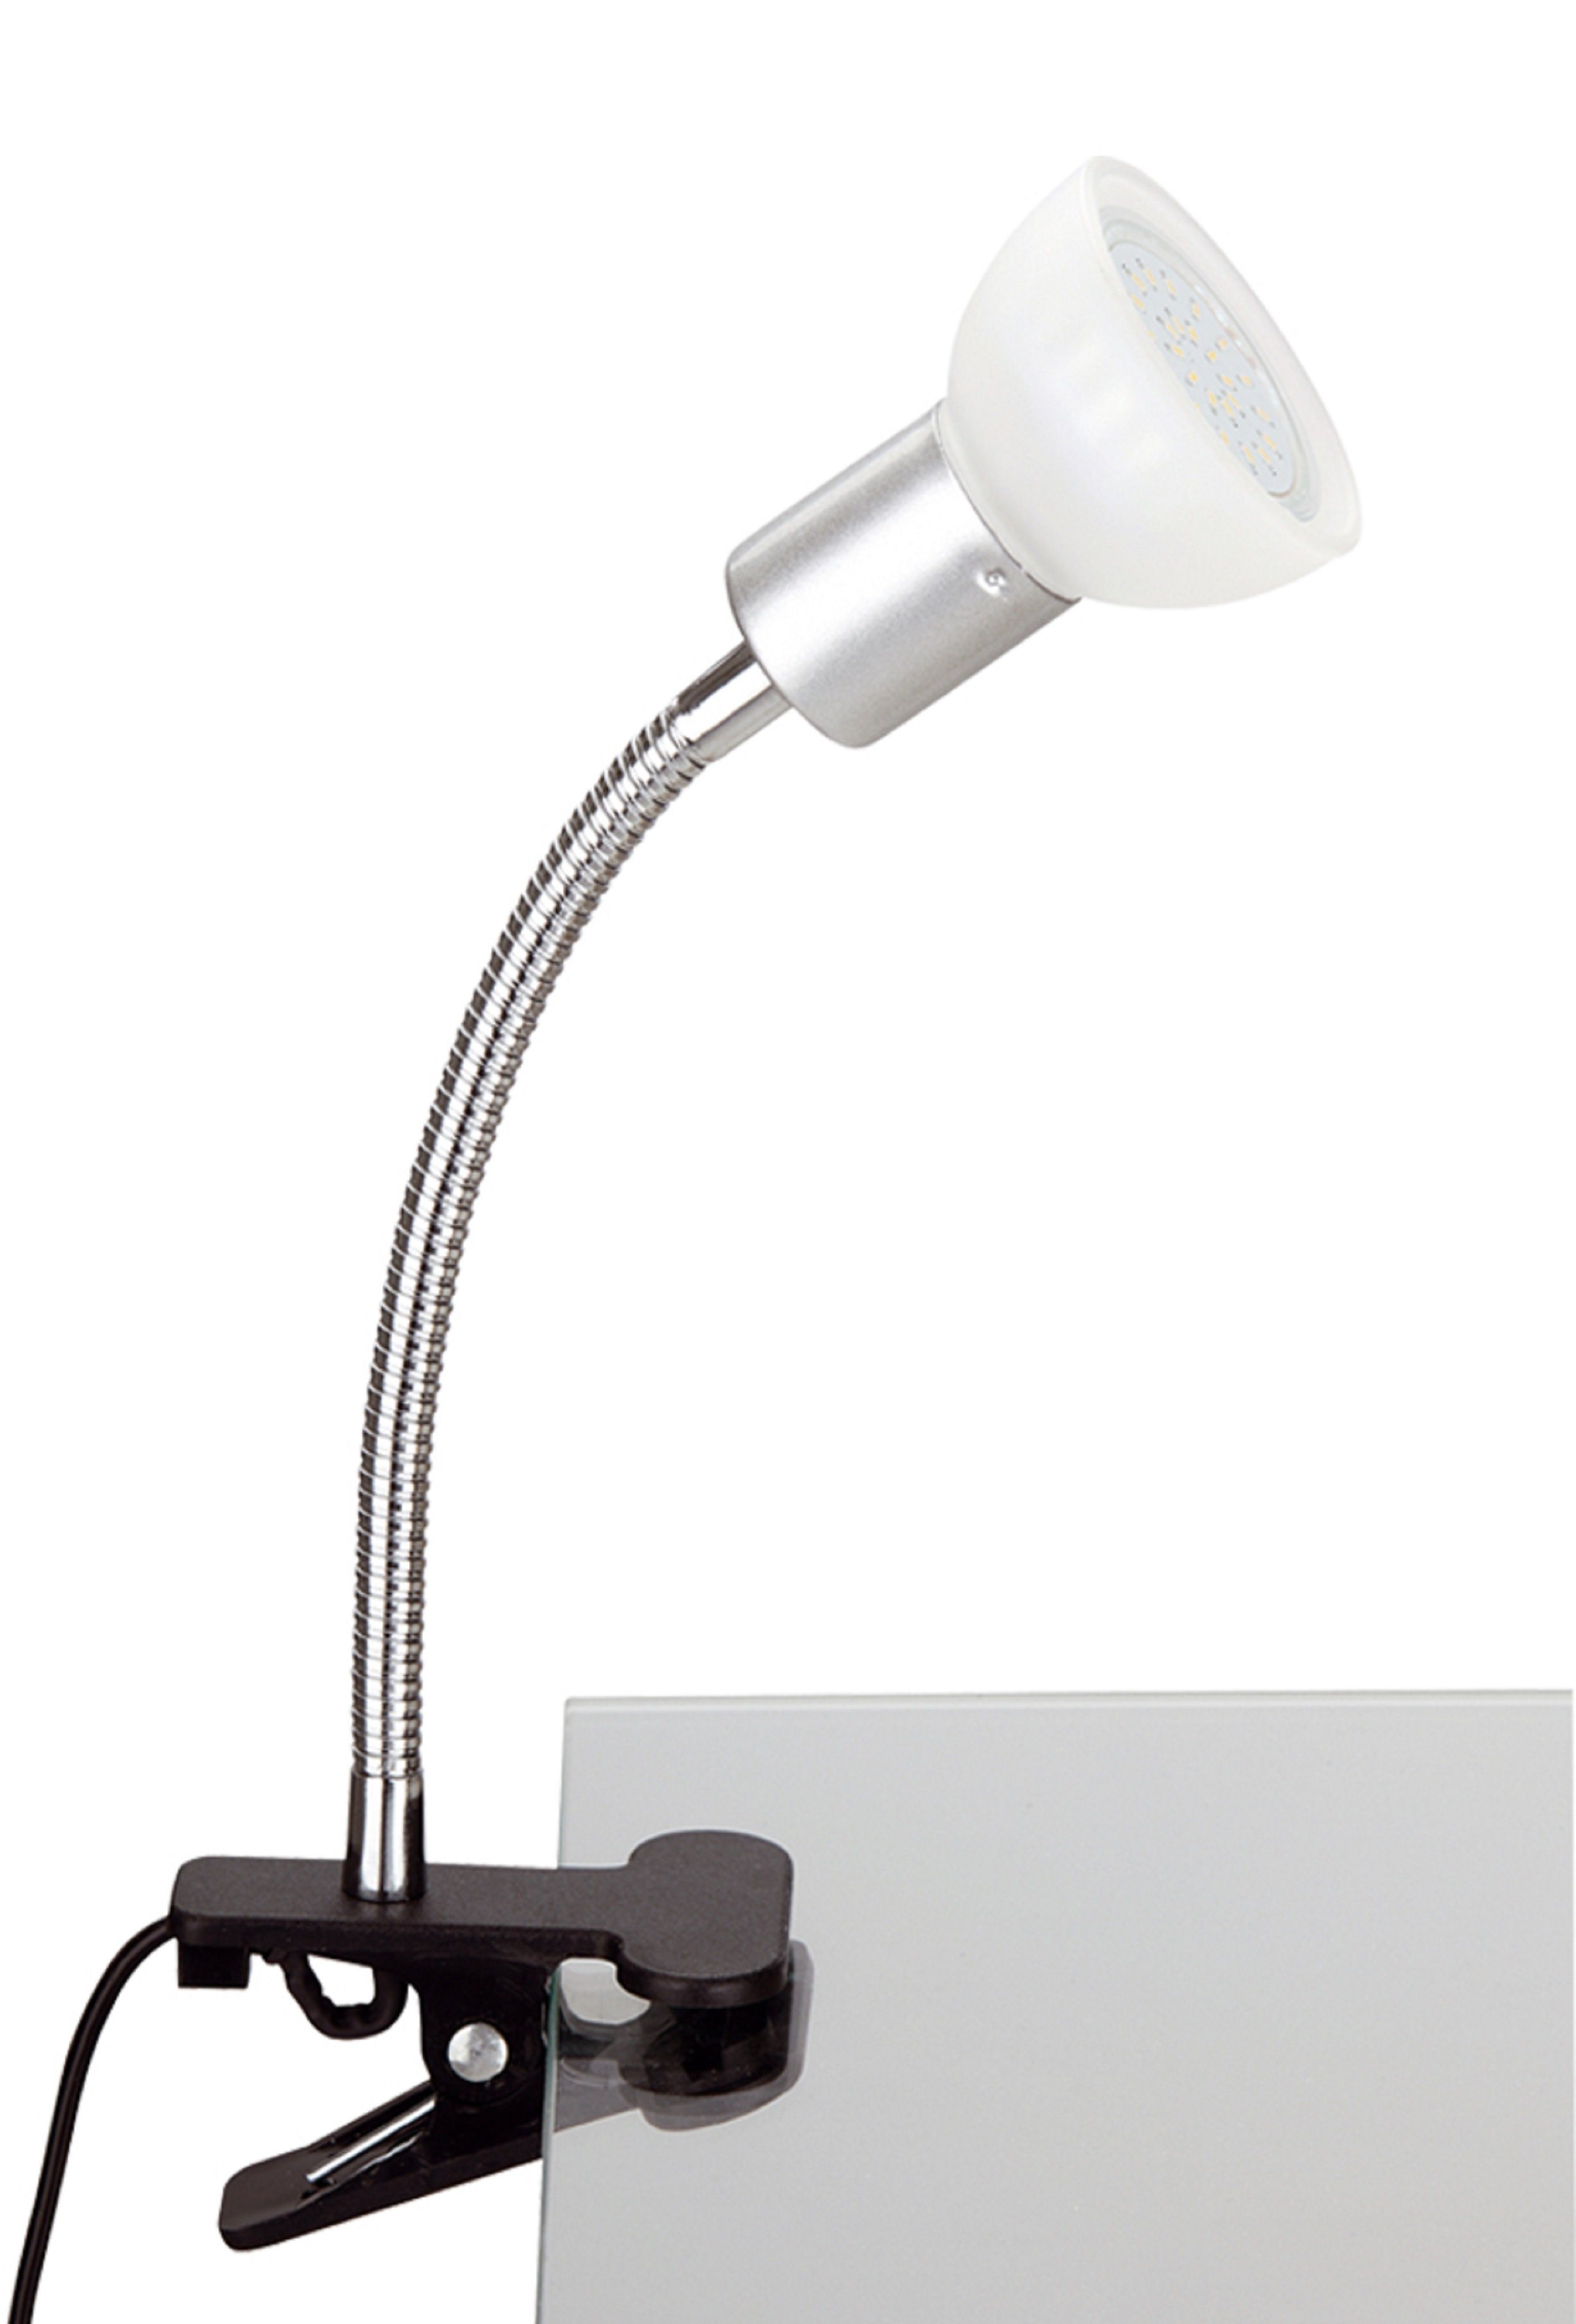 LED Klemmleuchte dimmbar Schreibtischlampe Leselampe USB Kosmetik Tattoo Lampe